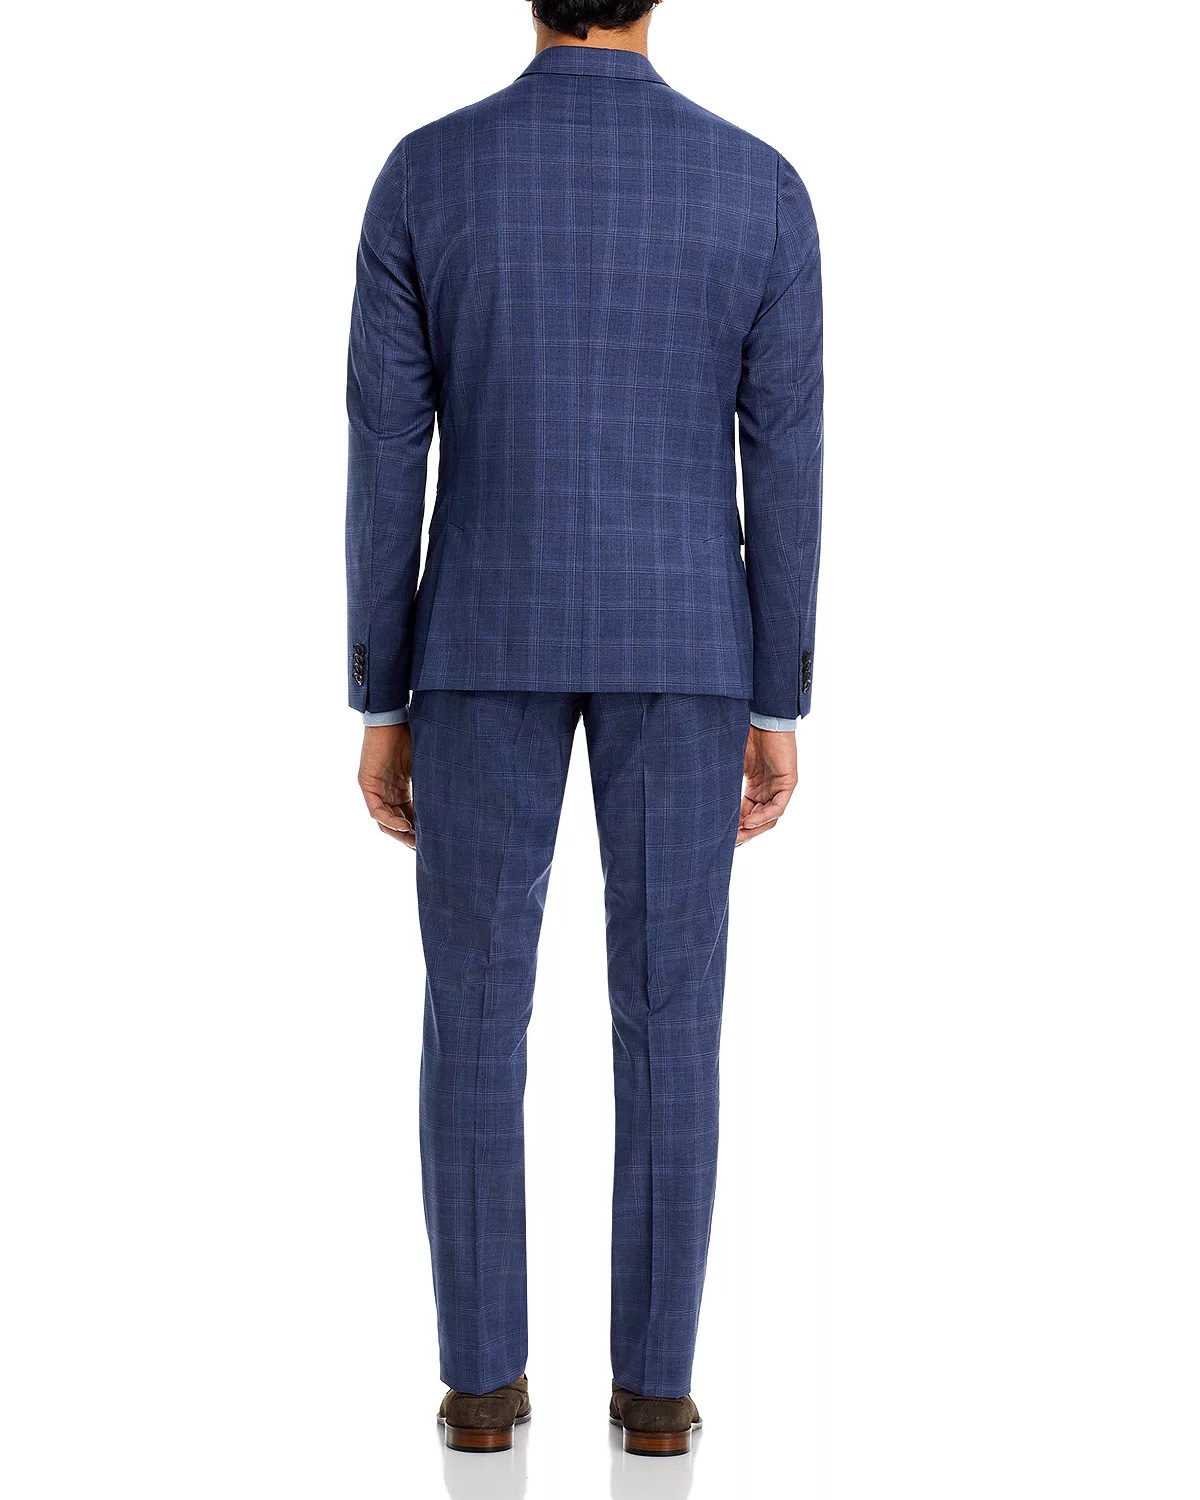 Soho Plaid Extra Slim Fit Suit - 3